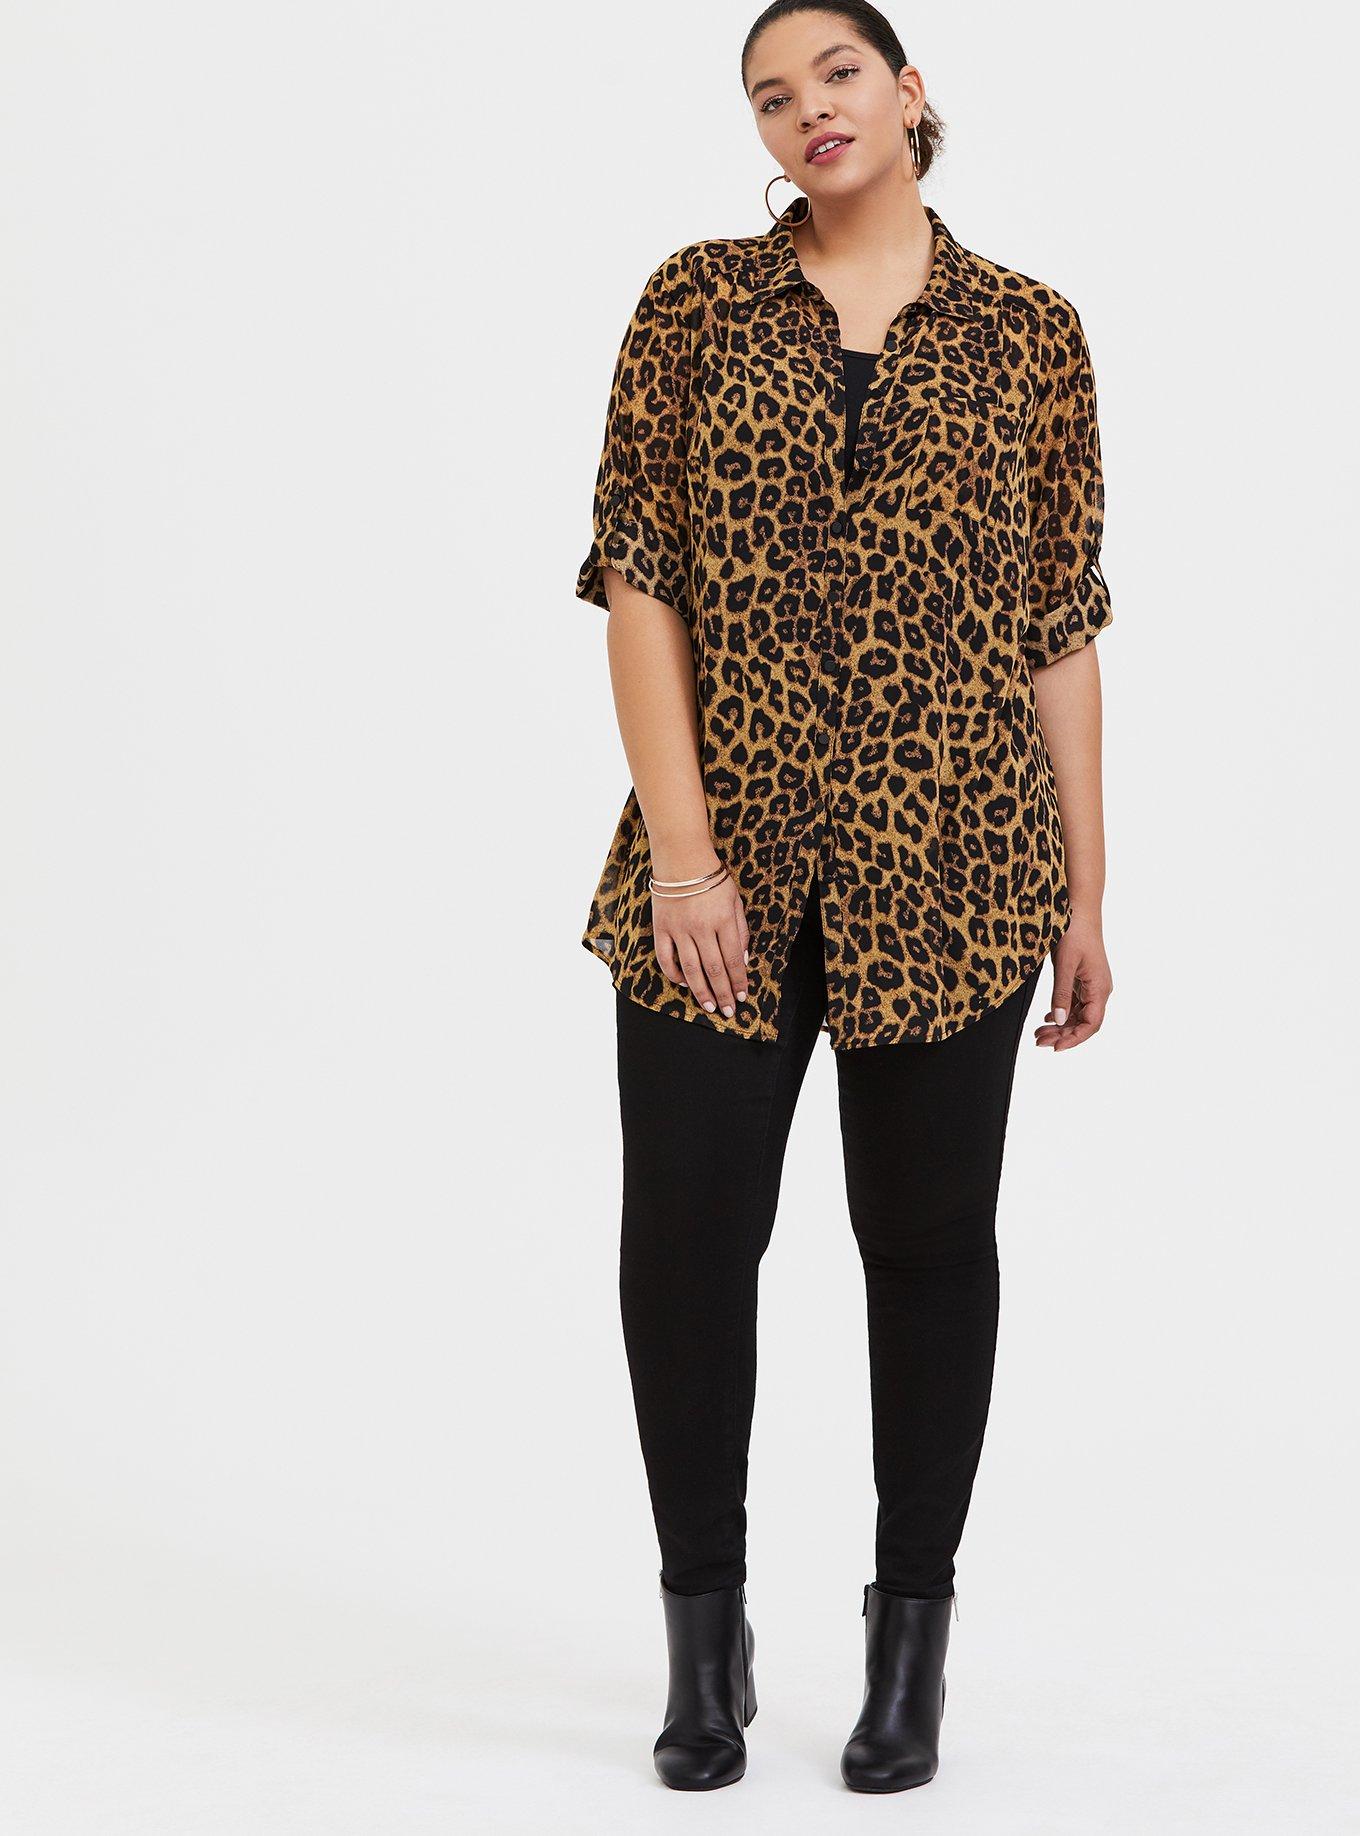 Torrid Leopard Chiffon Button Front Shirt Dress Size 0 Large 12